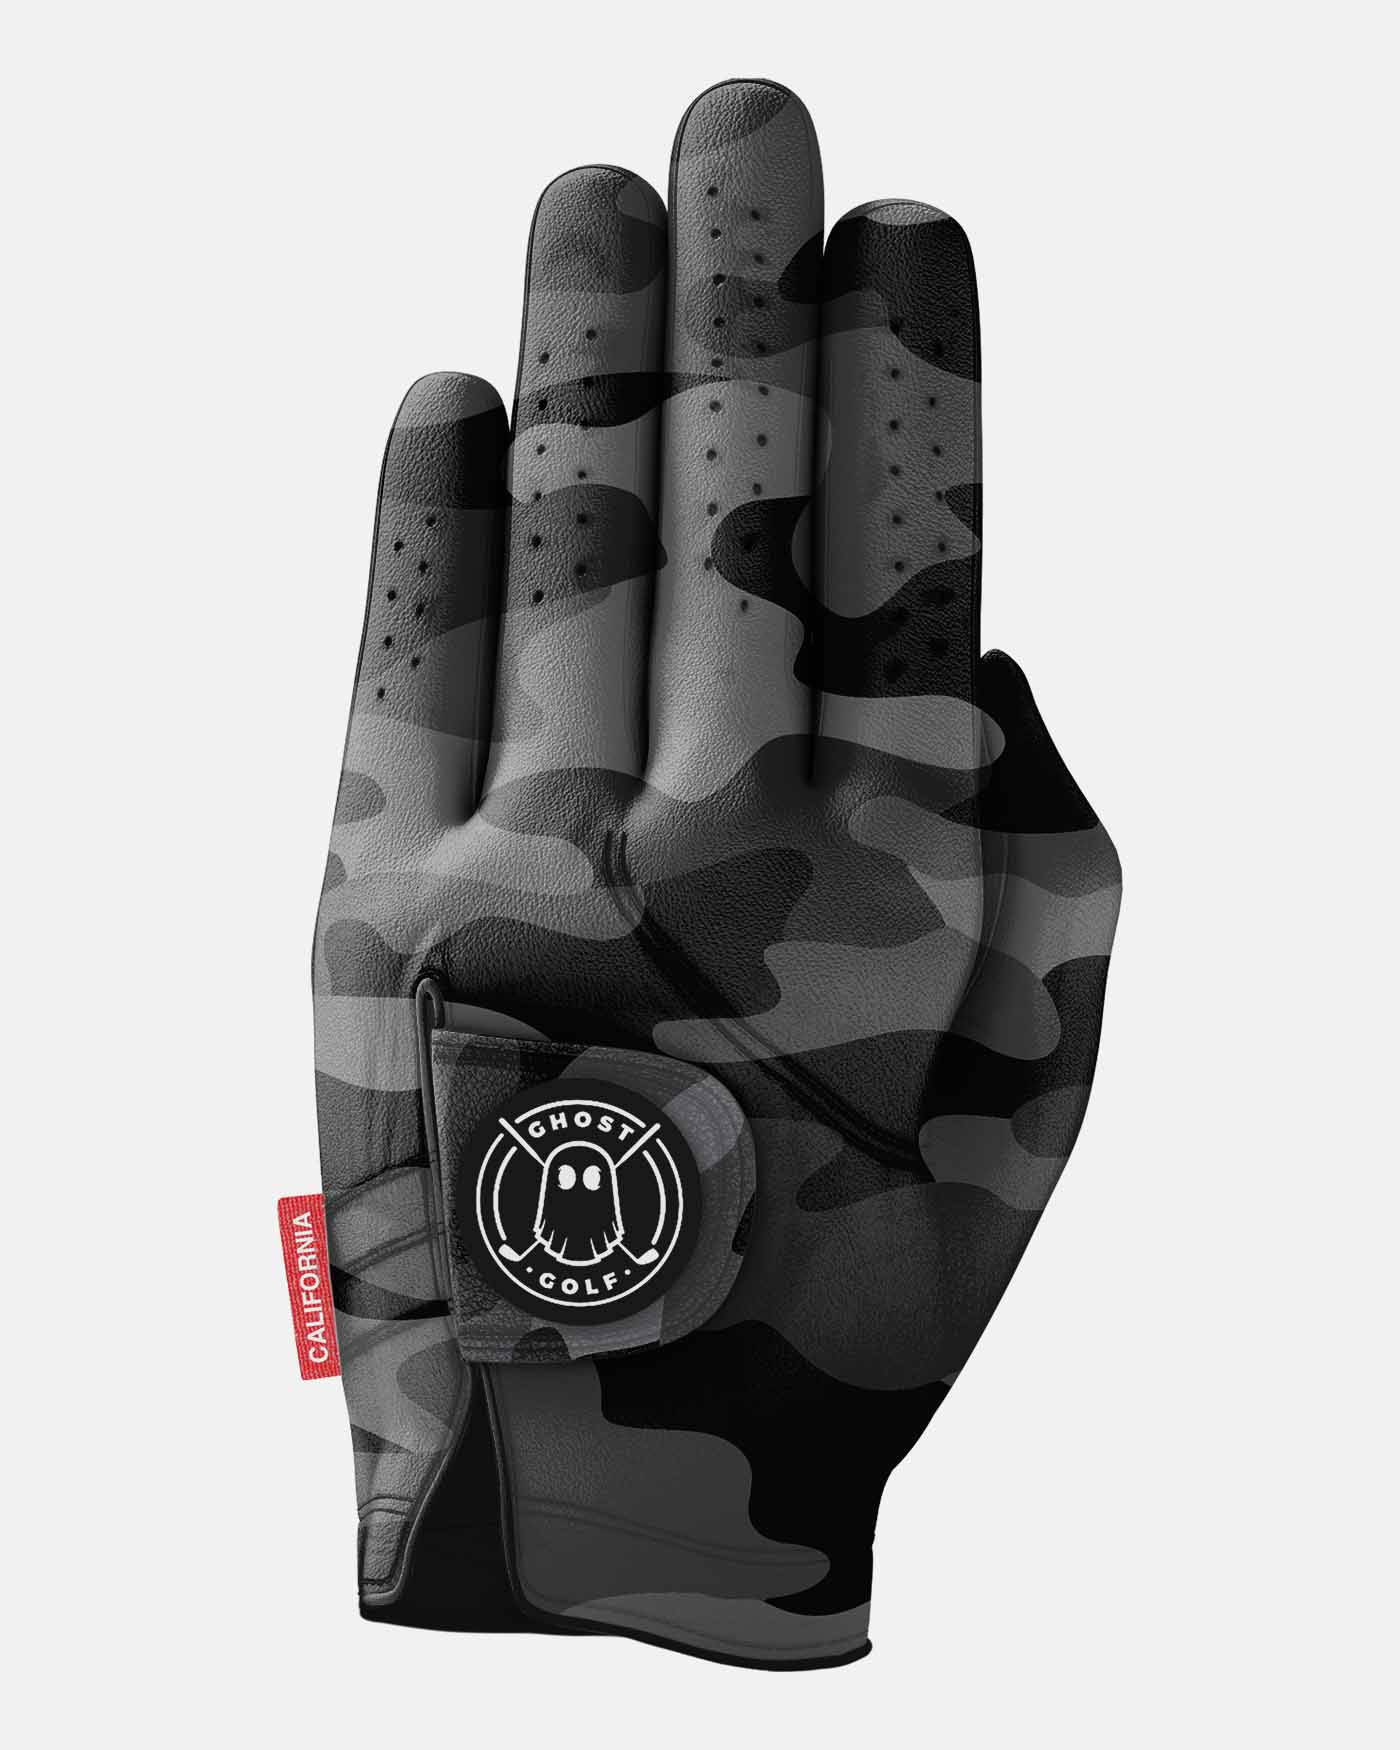 Ghost Left Hand Glove, Black Camo